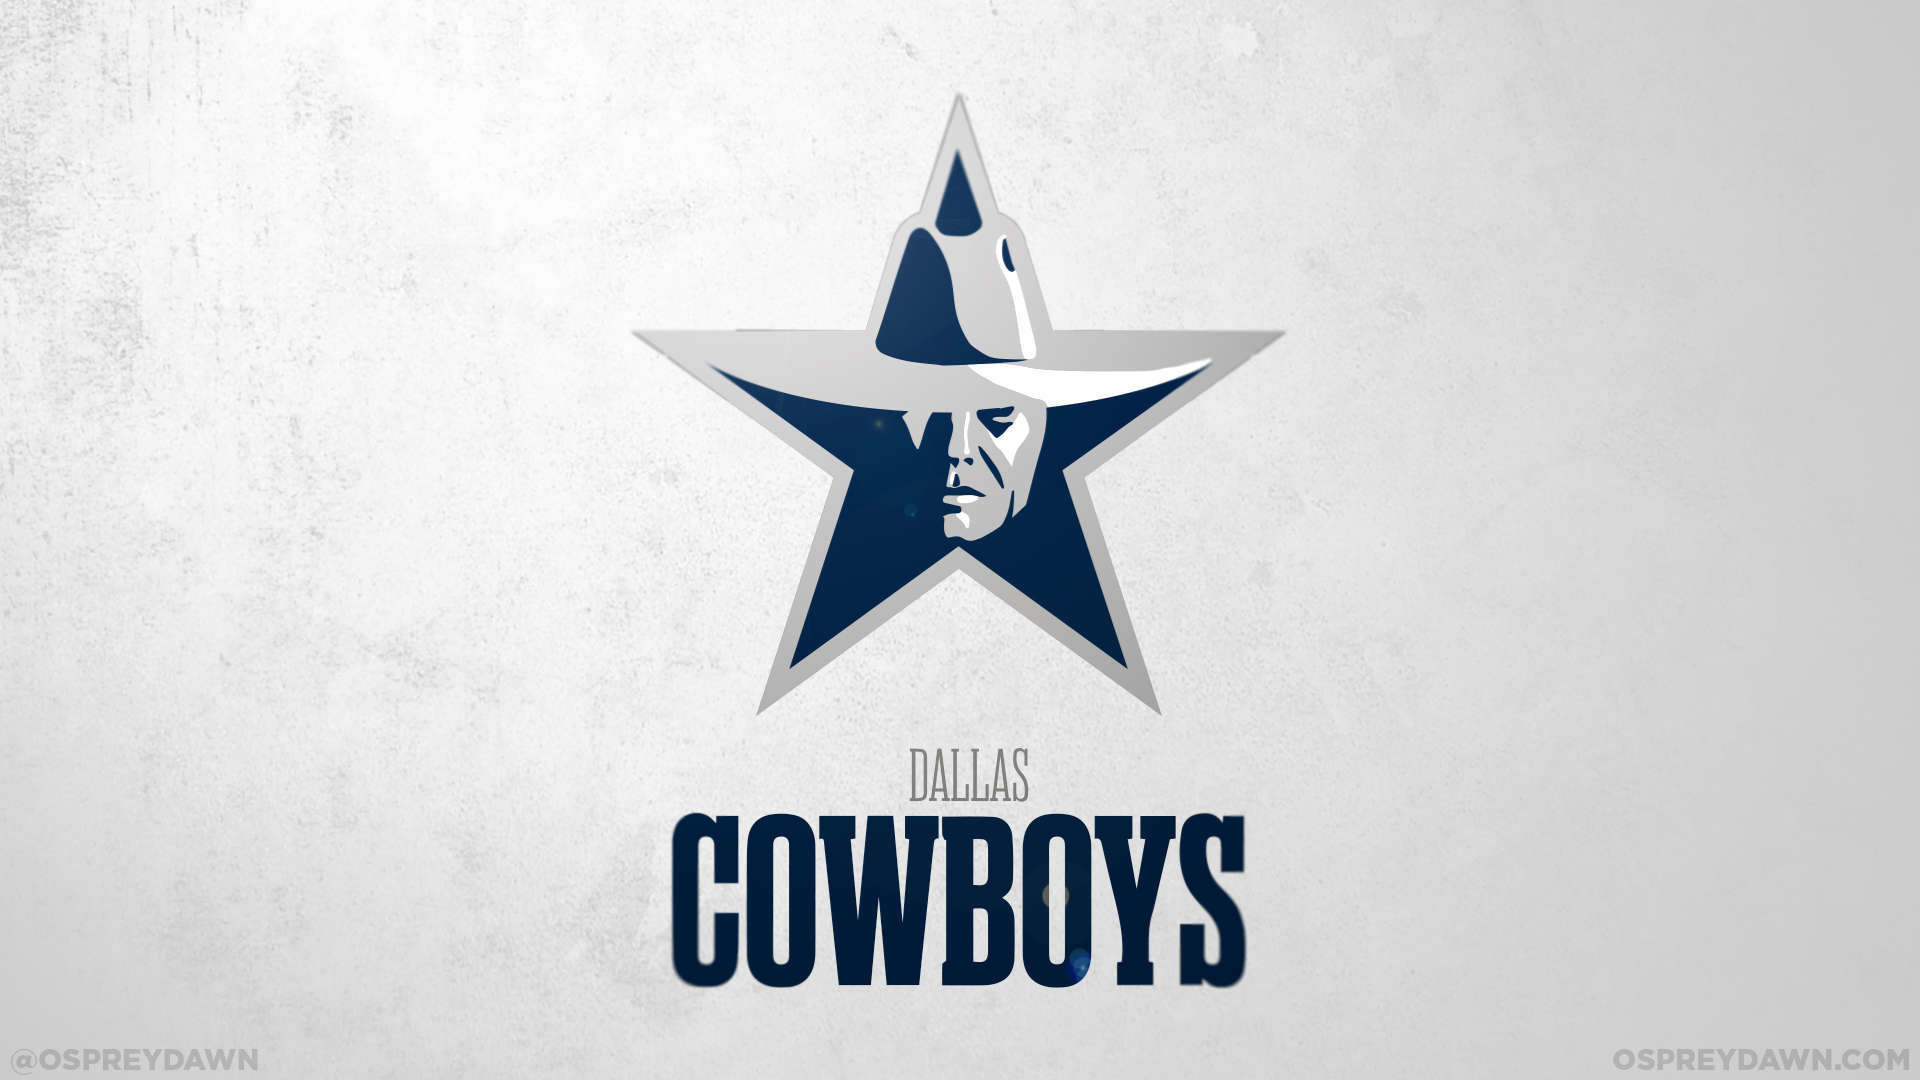 1920x1080 Dallas Cowboys Hd Wallpapers - http://wallpaperzoo.com/dallas-cowboys